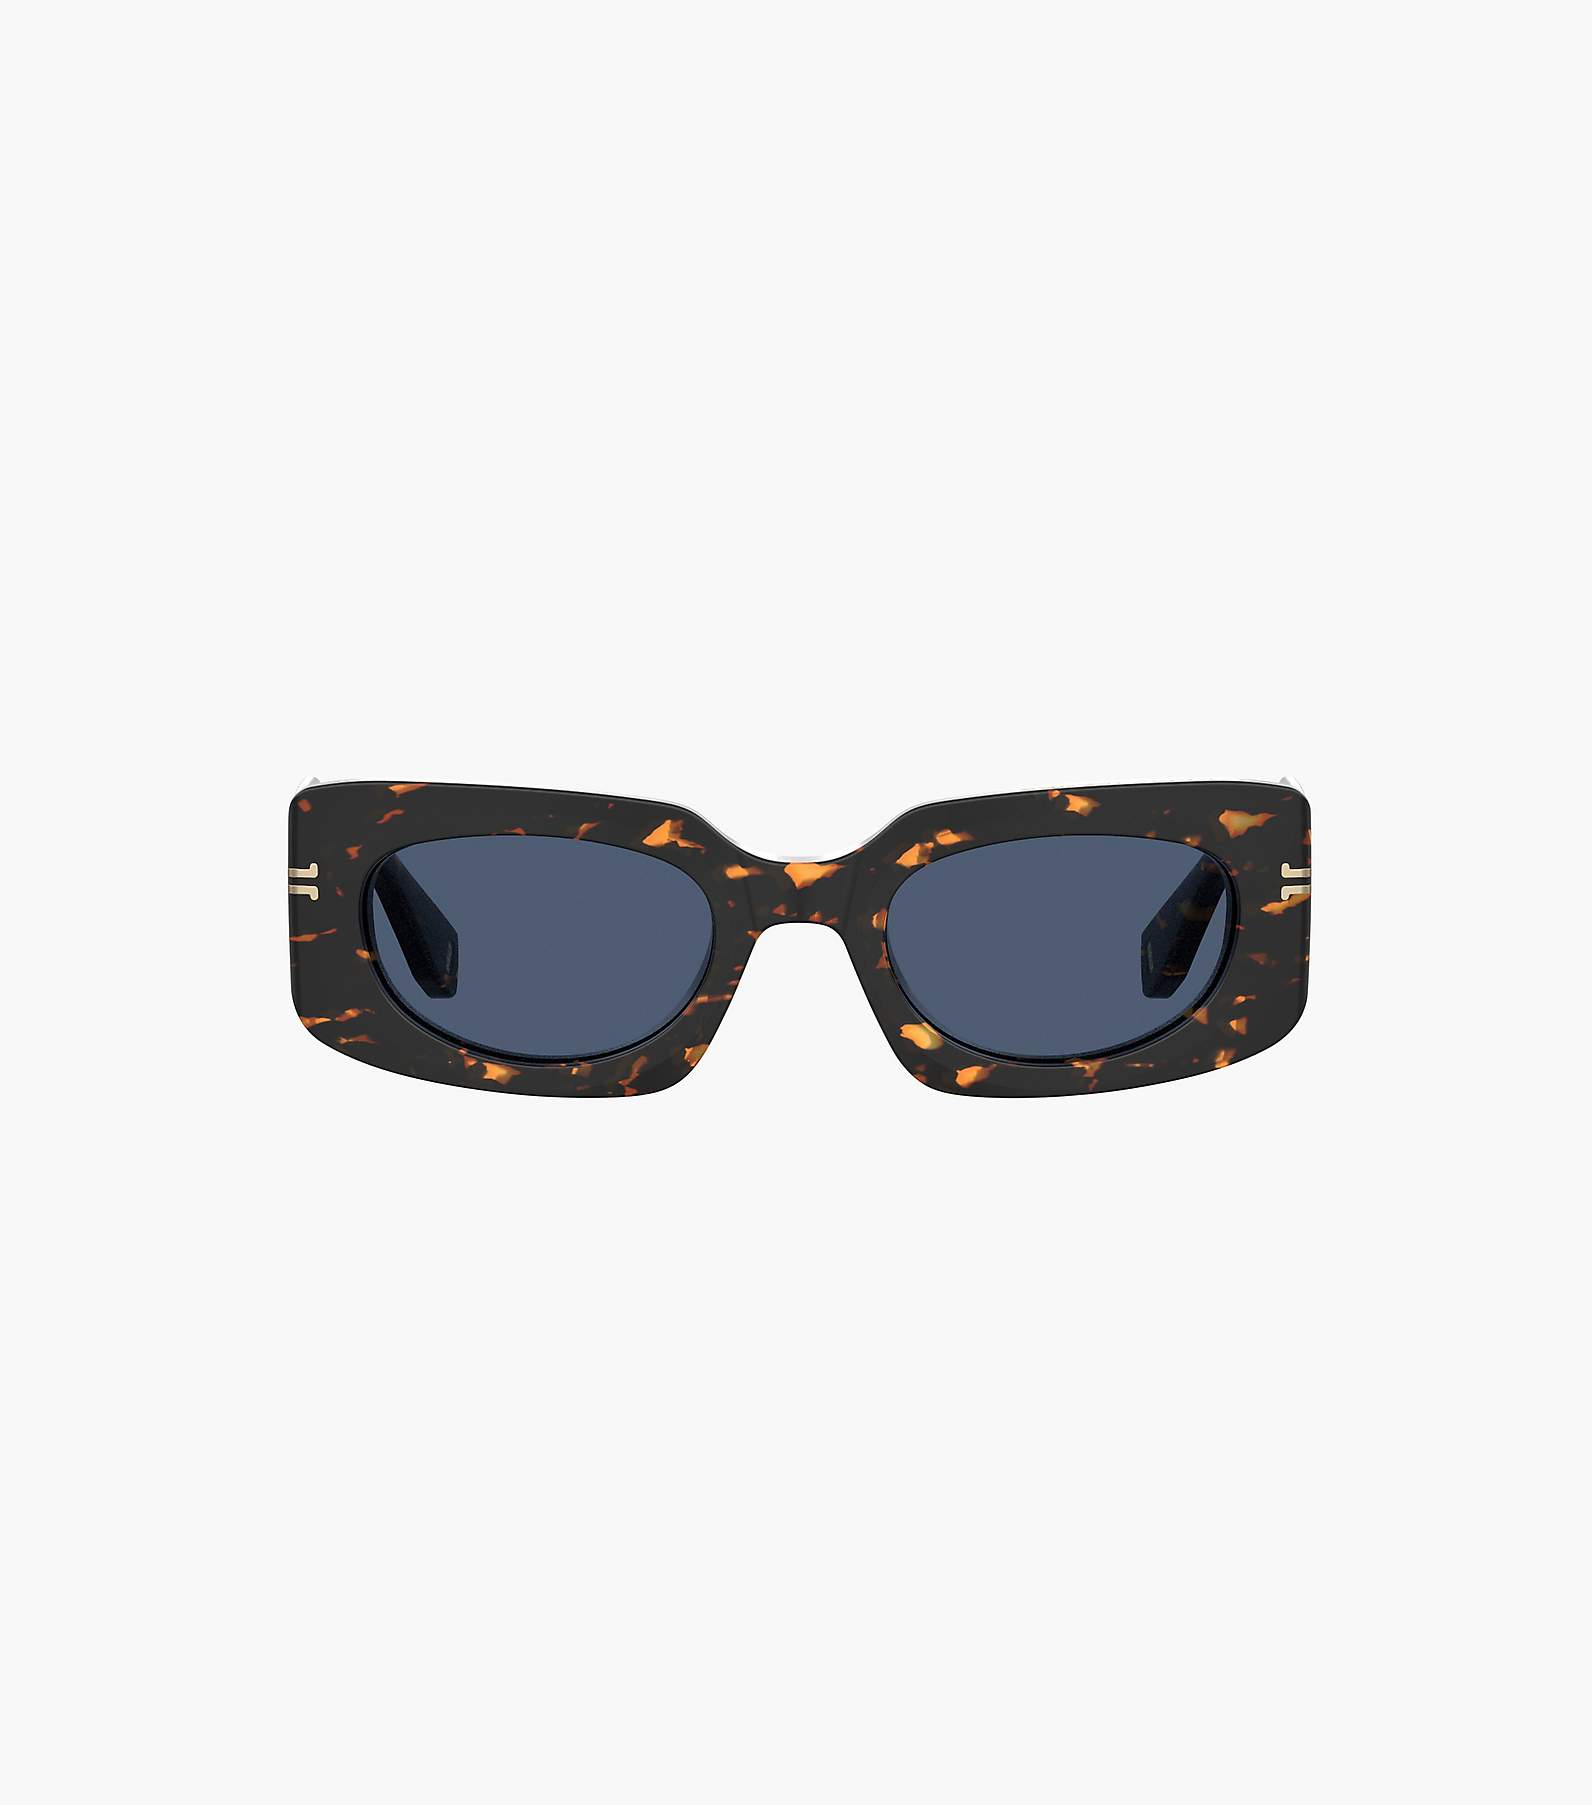 Monogram Rectangular Sunglasses, Marc Jacobs